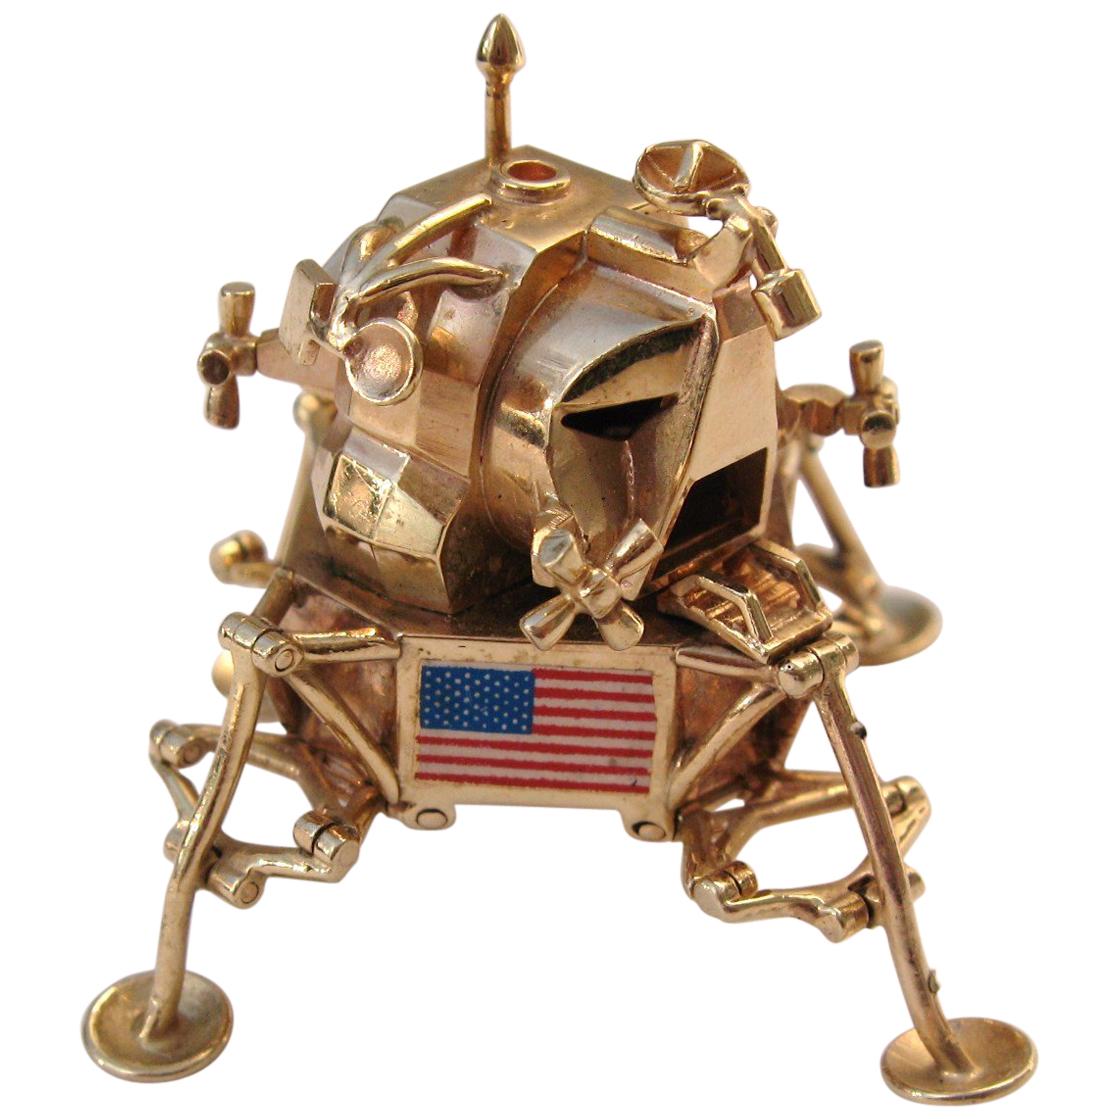 14 Karat Gold model of Apollo 11 articulated Lunar Excursion, 1969 Module, USA